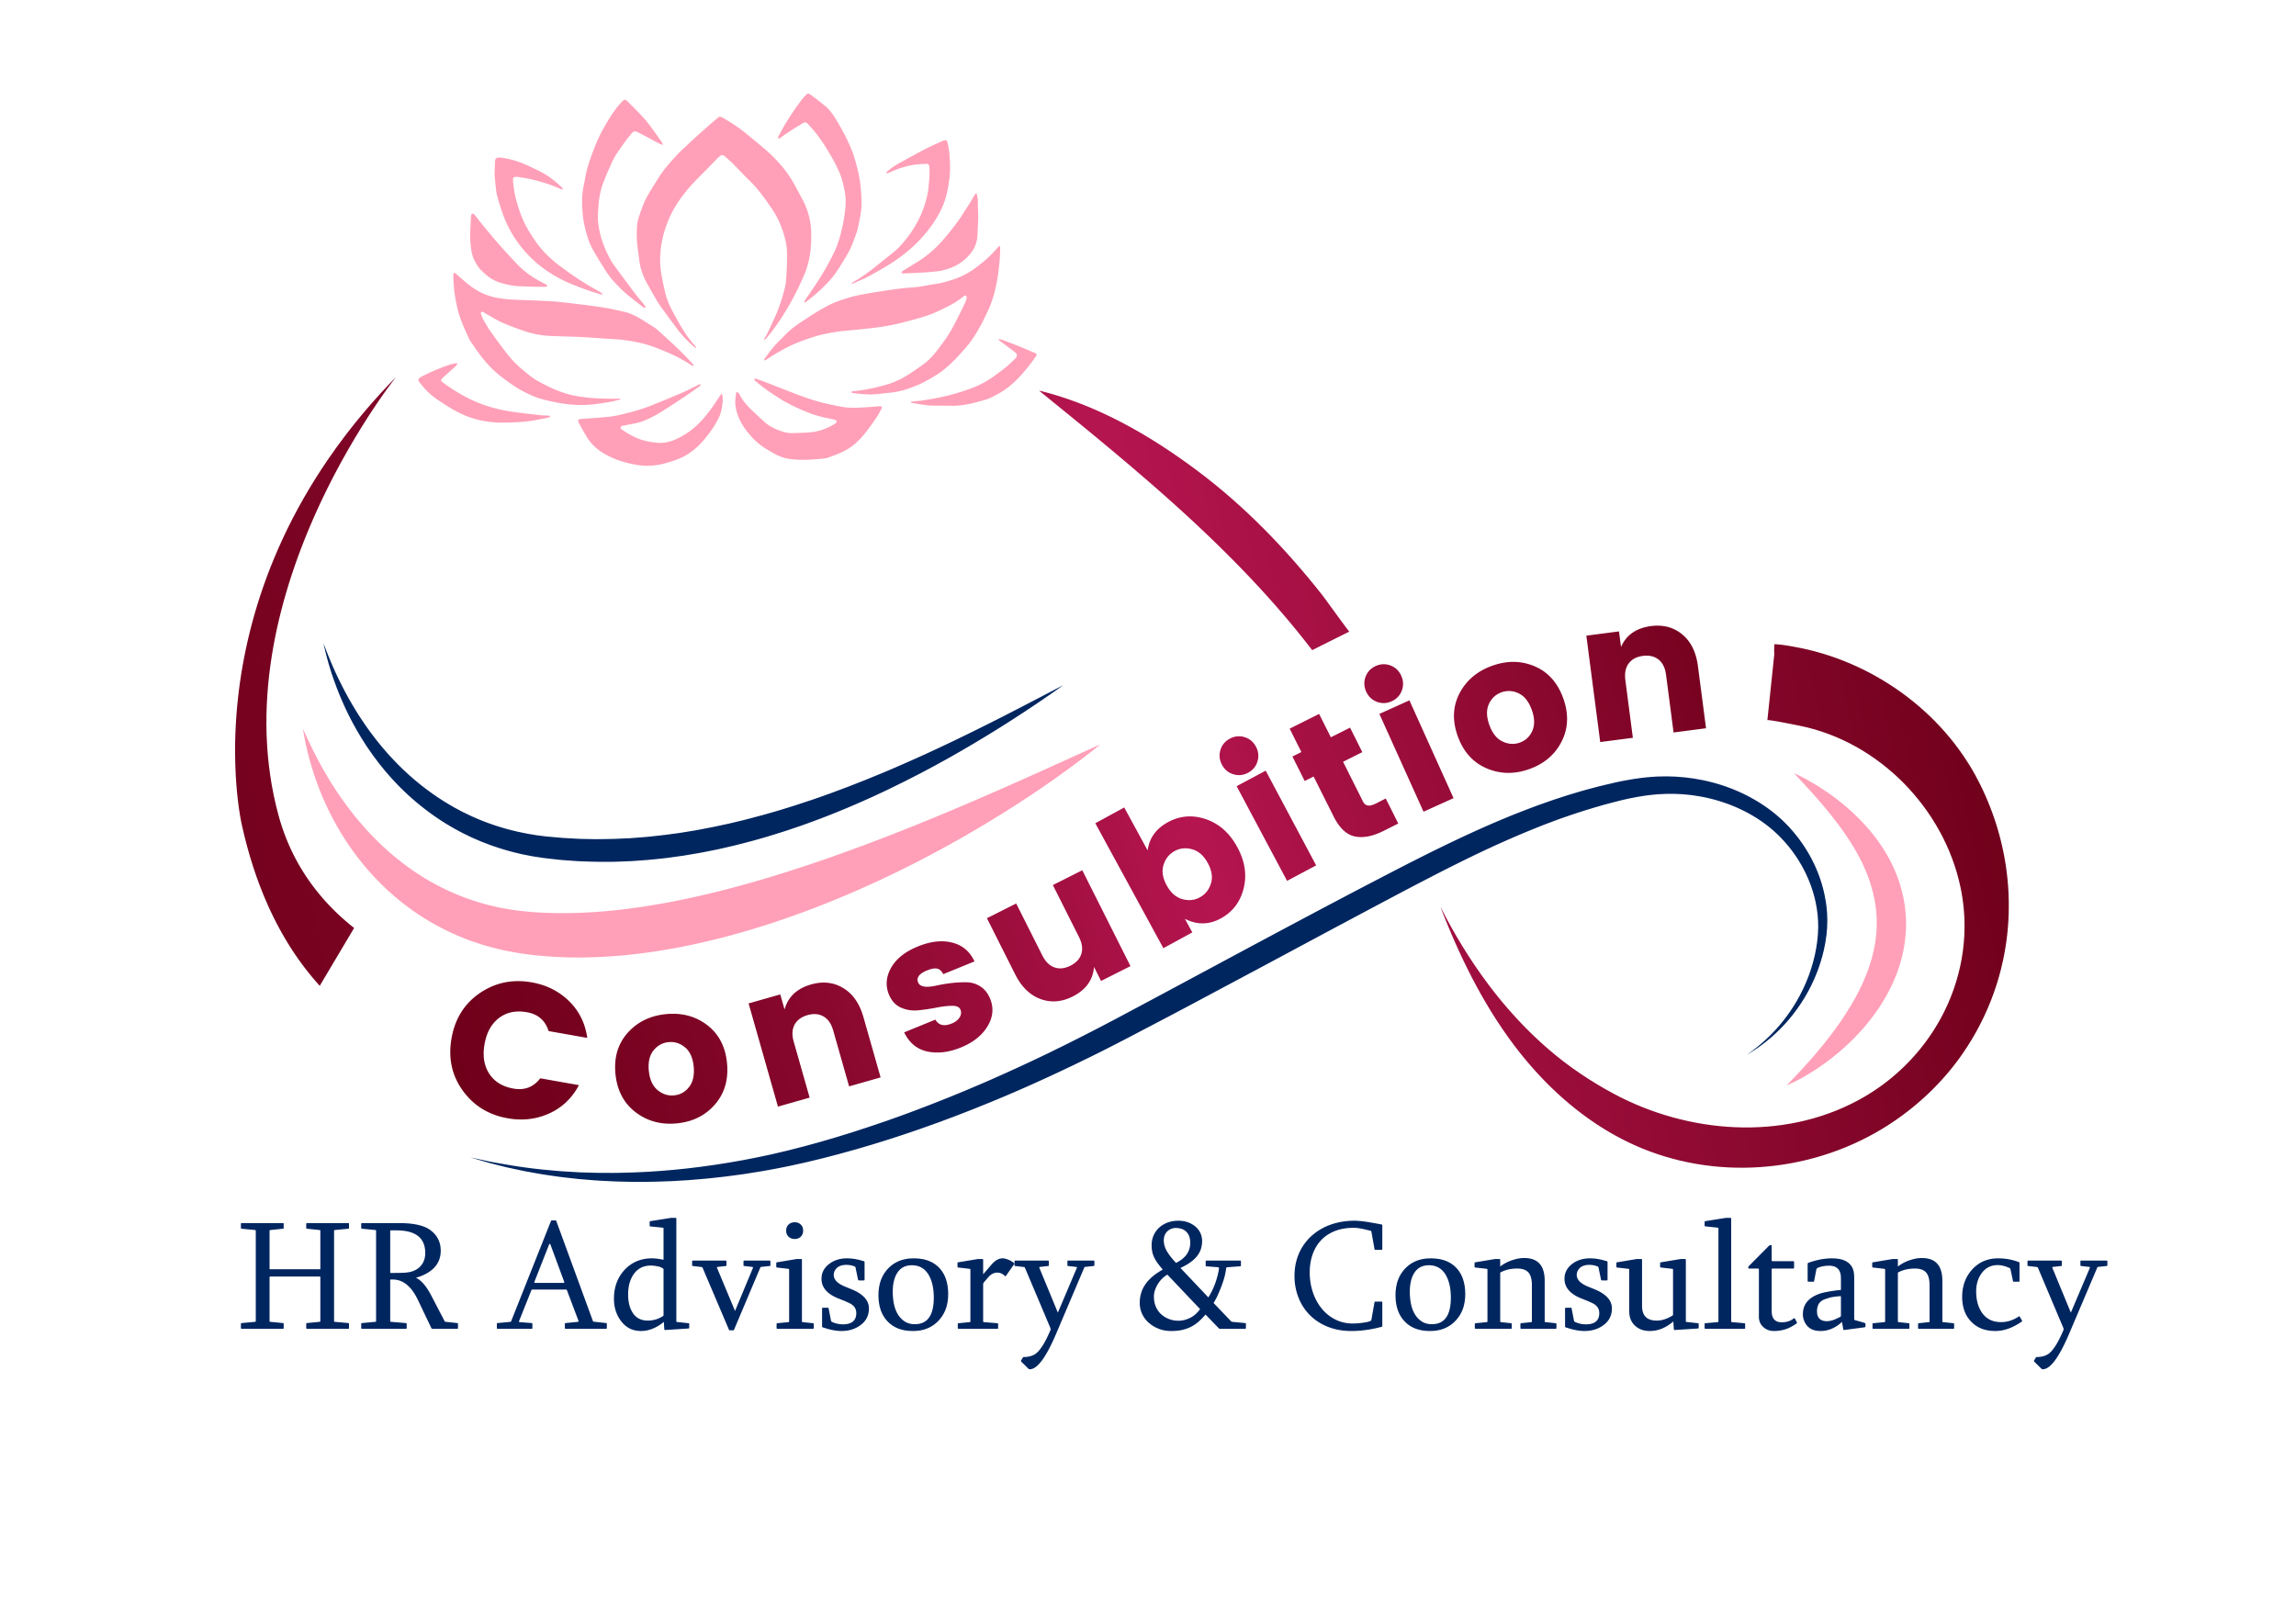 Consubition HR Advisory & Consultancy